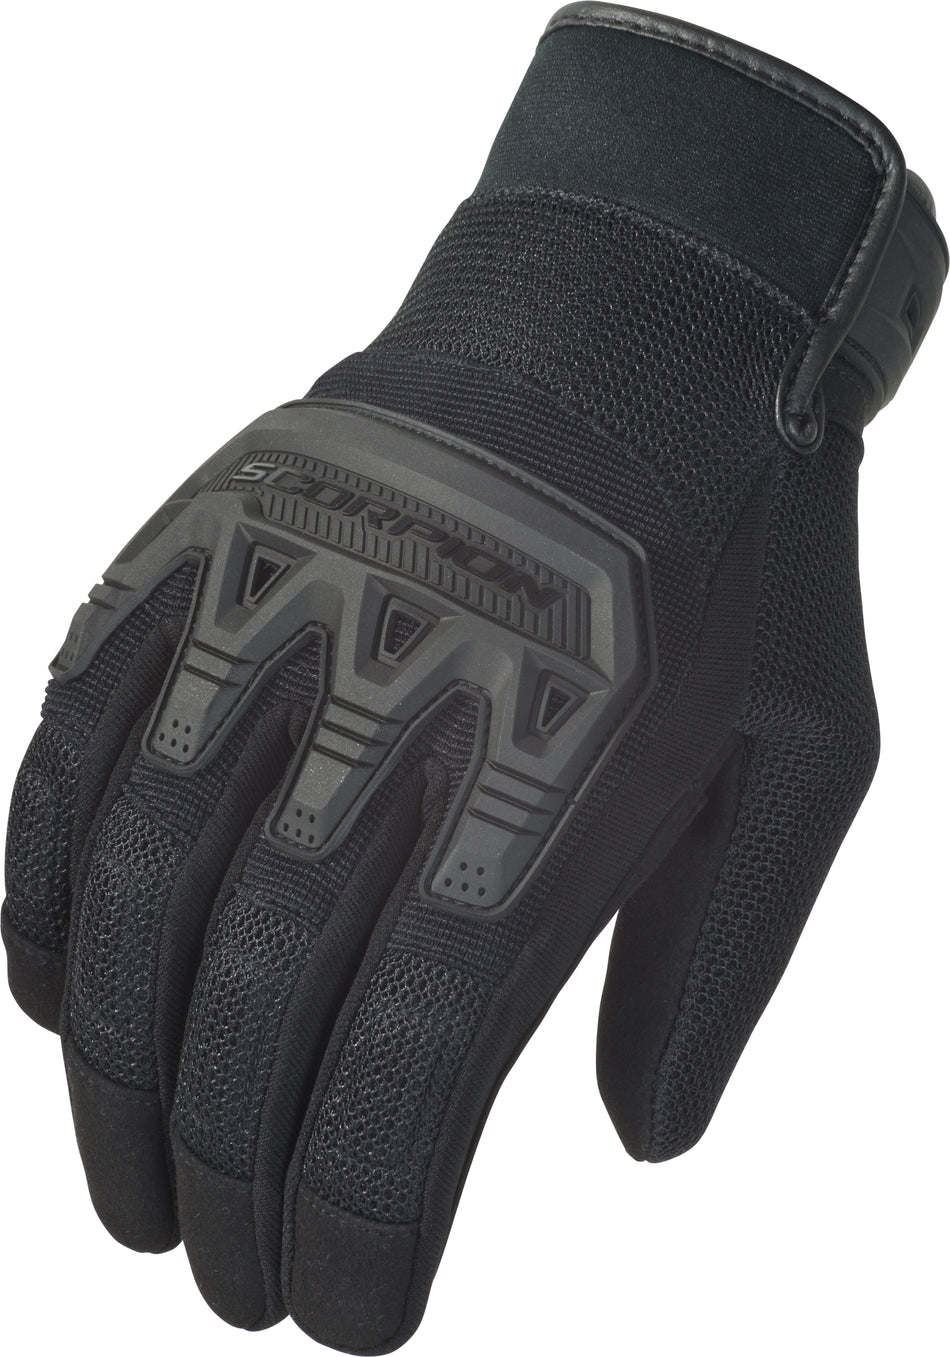 SCORPION EXO Covert Tactical Gloves Black 3x G32-038